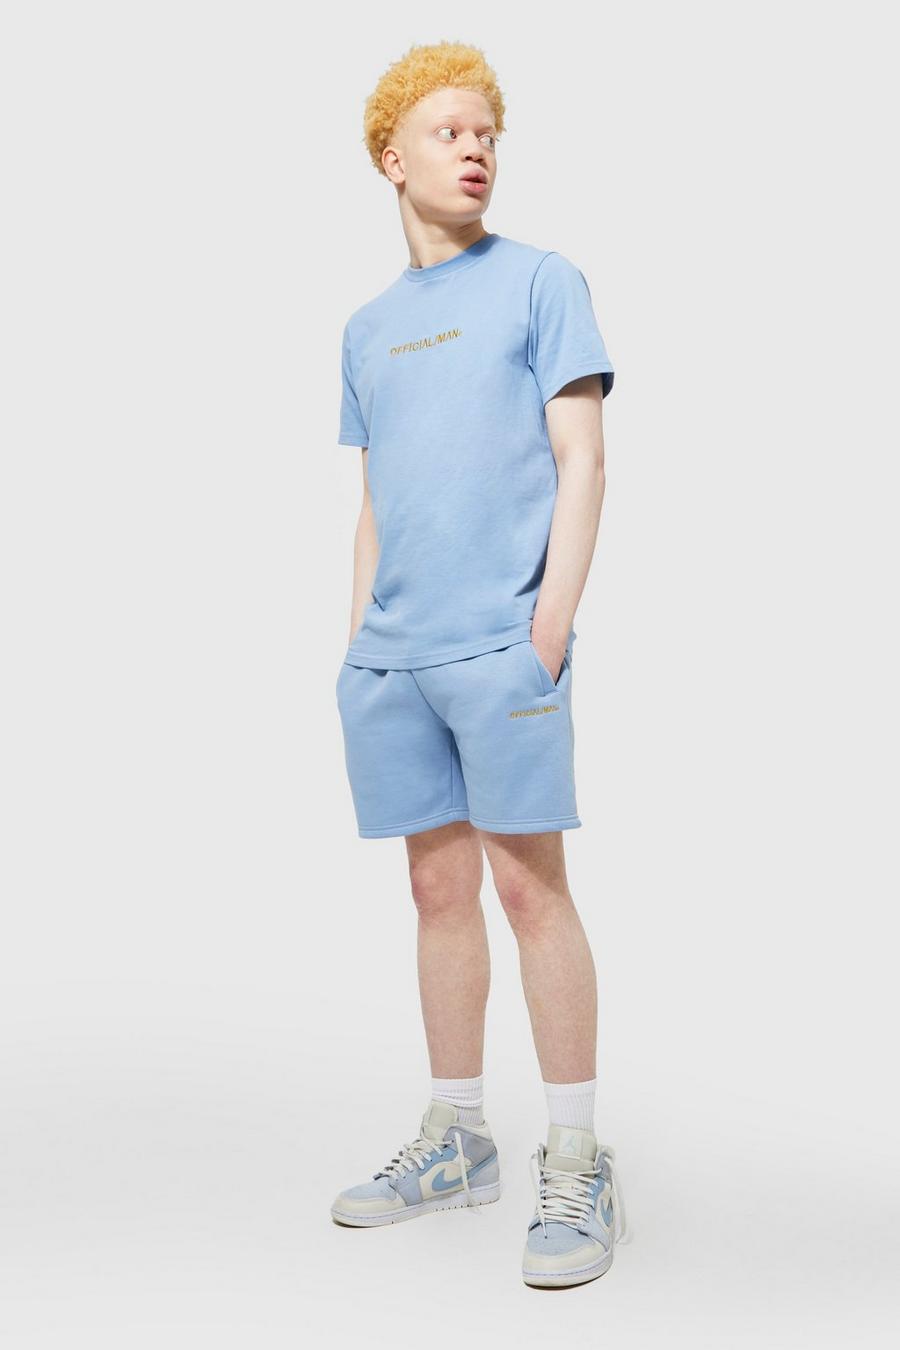 Slim-Fit Official Man T-Shirt und Shorts, Light blue image number 1